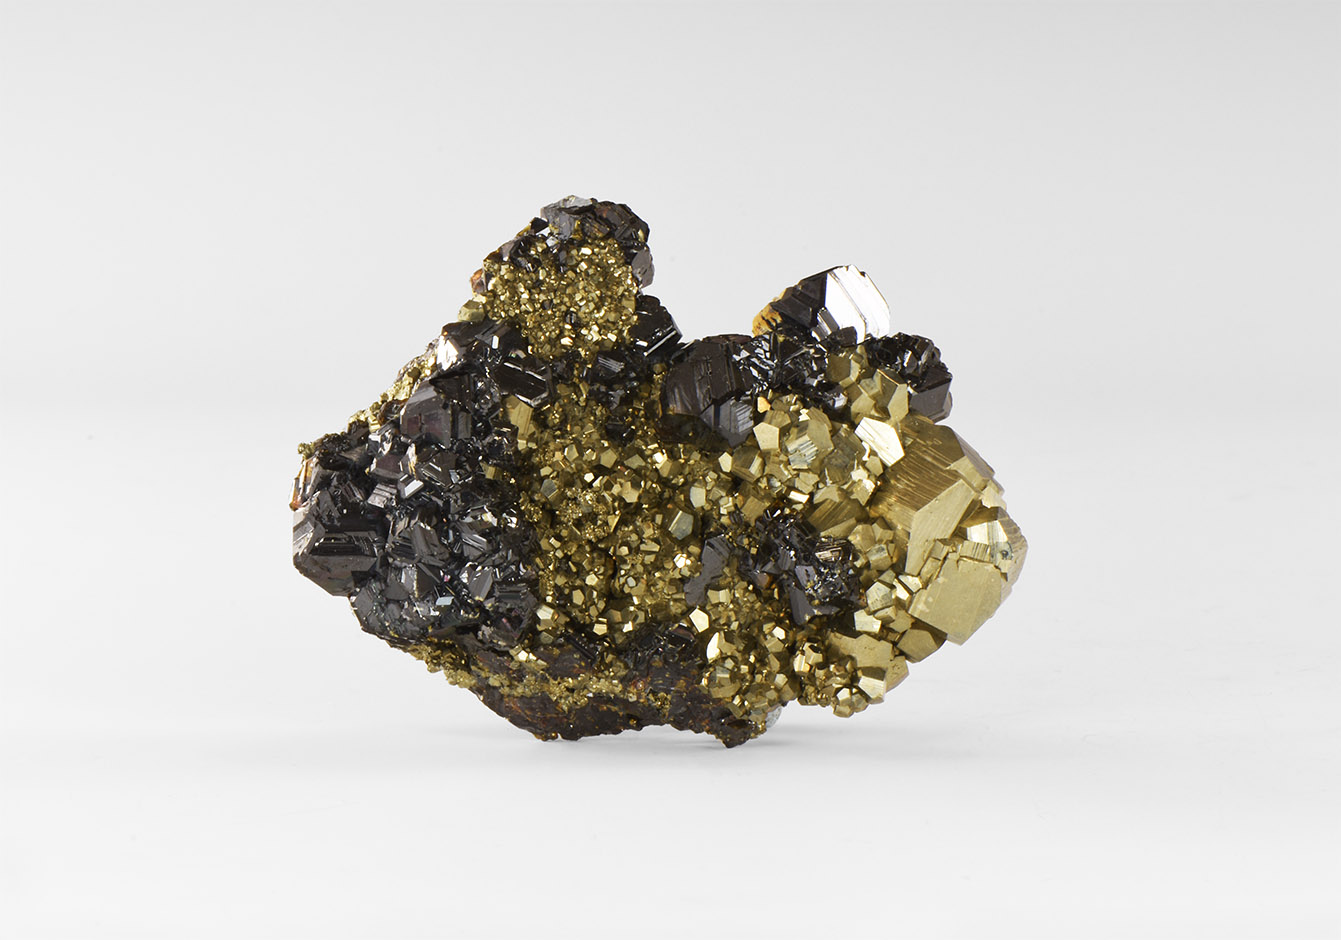 Natural history - pyrite 'fool's gold'